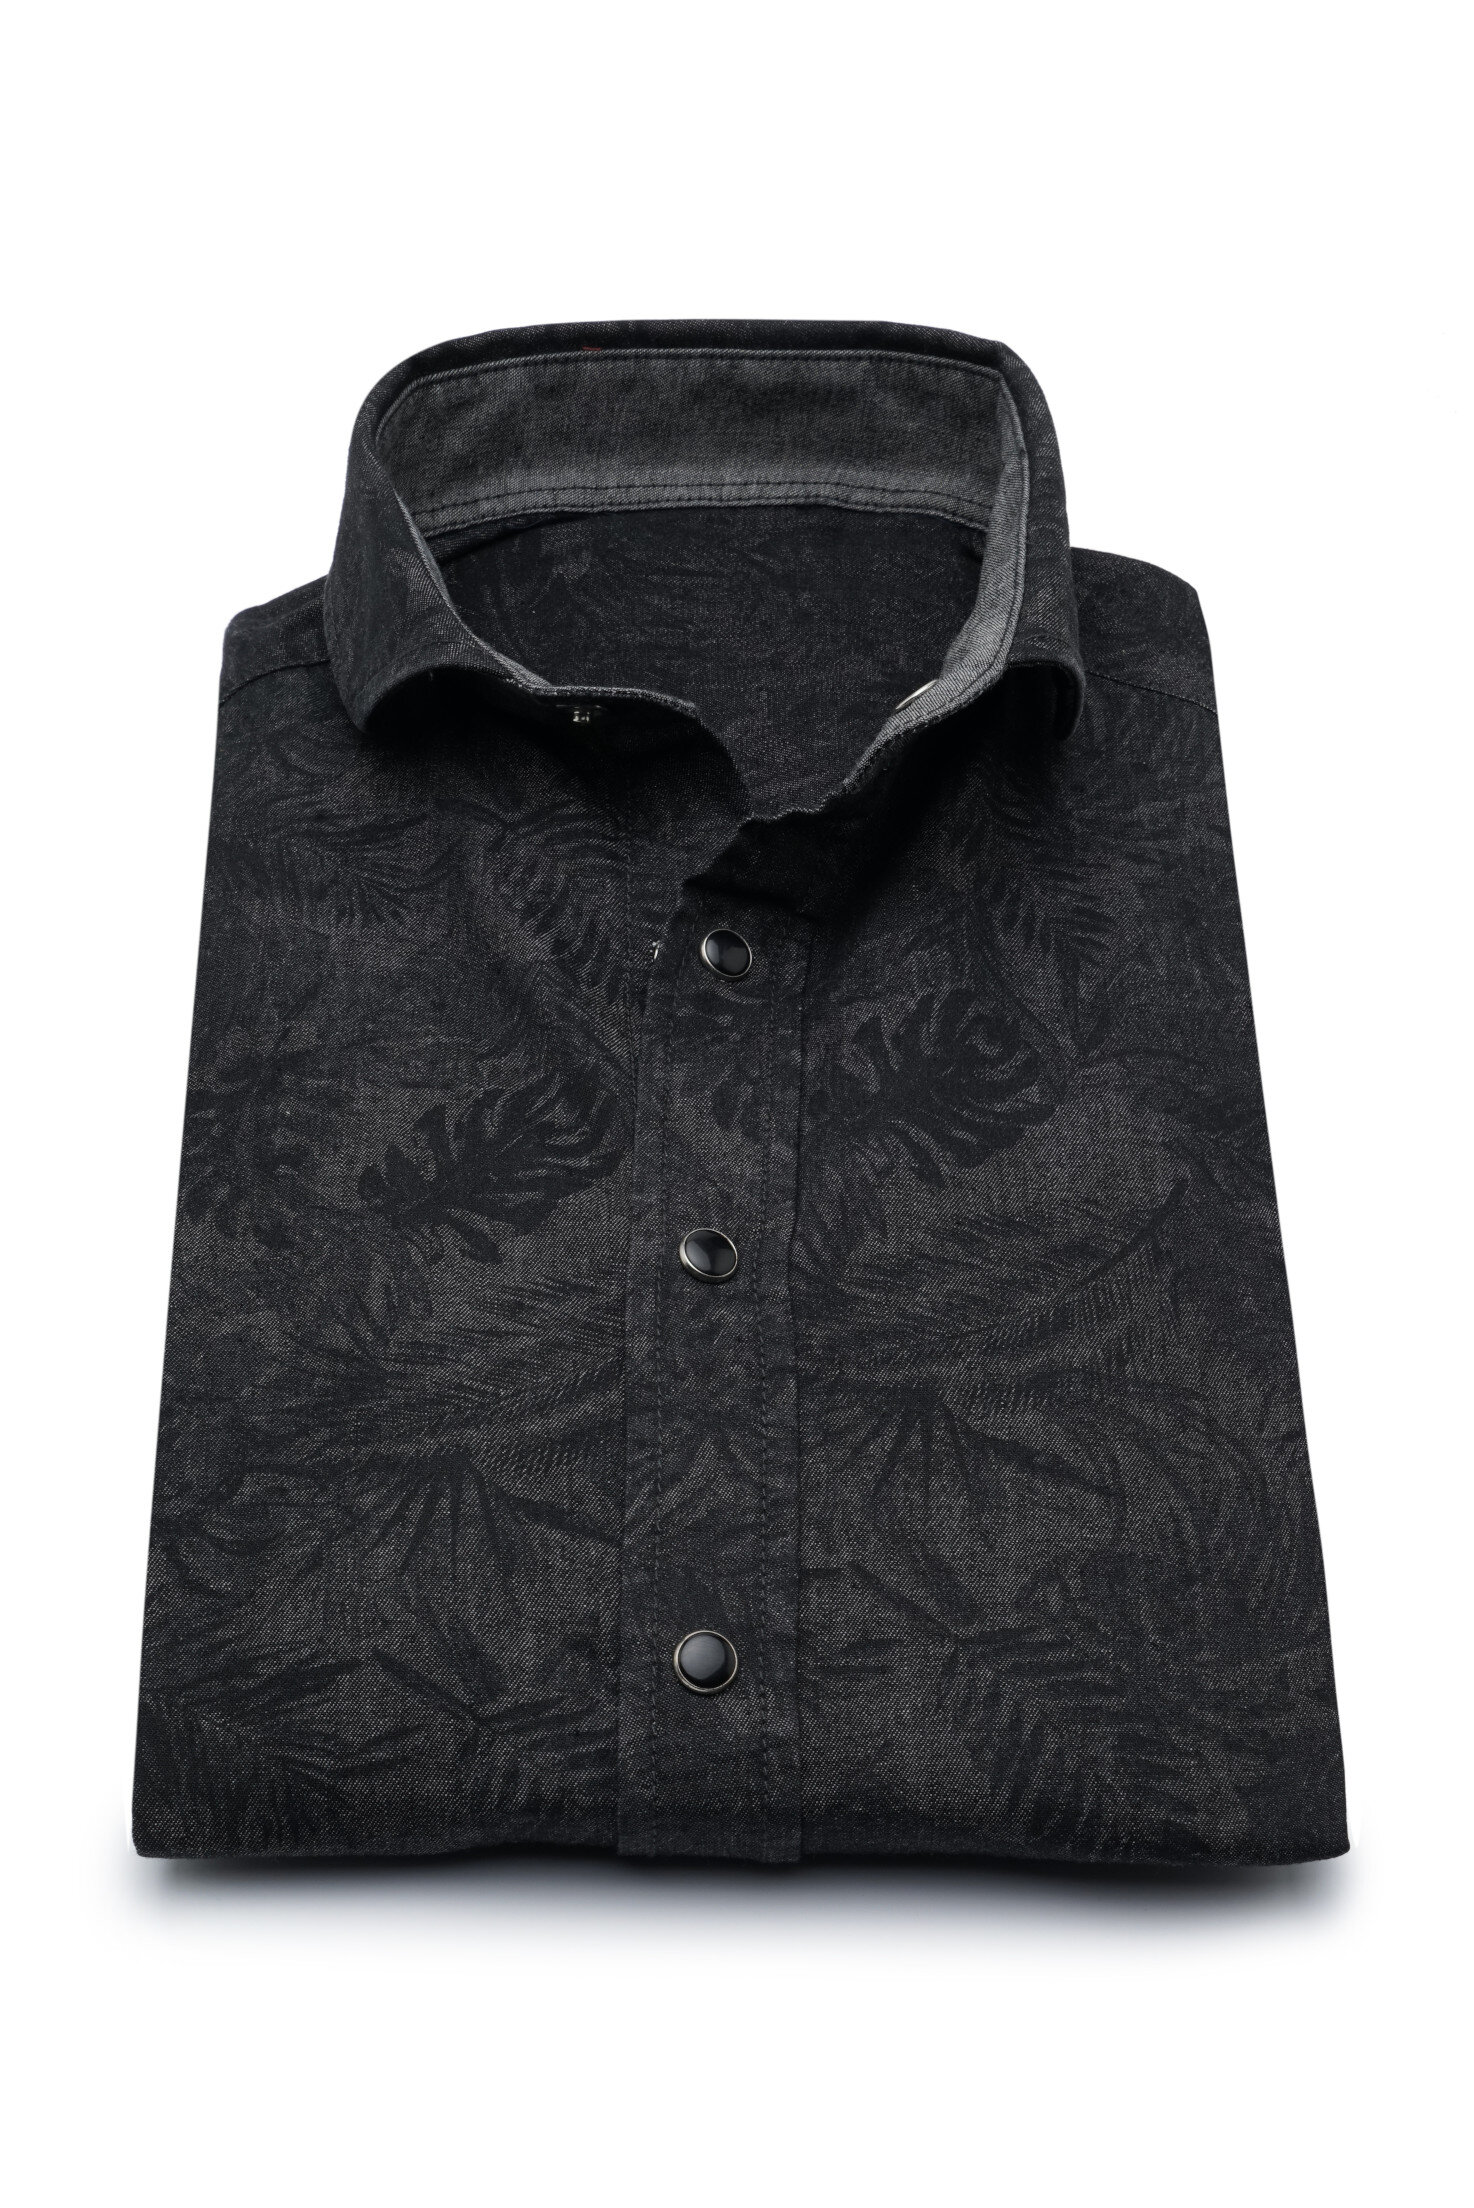 286 DEN004 | Yarn Dyed Shirts | Private Label Shirt Manufacturer | Turkey: 45 Onz - Rotation Print - Snap Button - Washed Casual Shirt - Jean - Denim Shirt - Sport Look - Casual Shirt